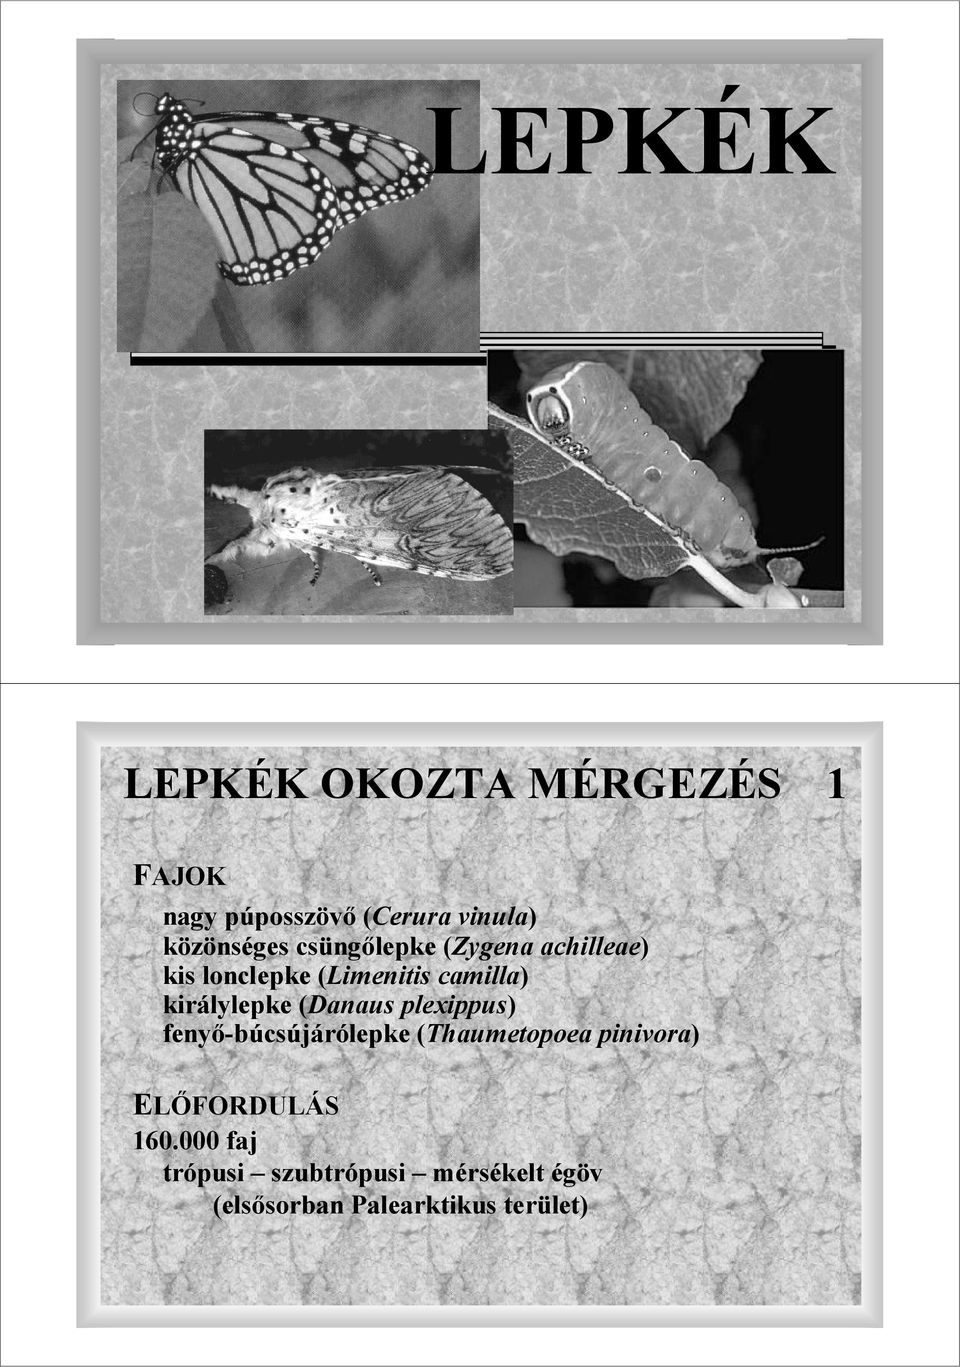 királylepke (Danaus plexippus) fenyı-búcsújárólepke (Thaumetopoea pinivora)